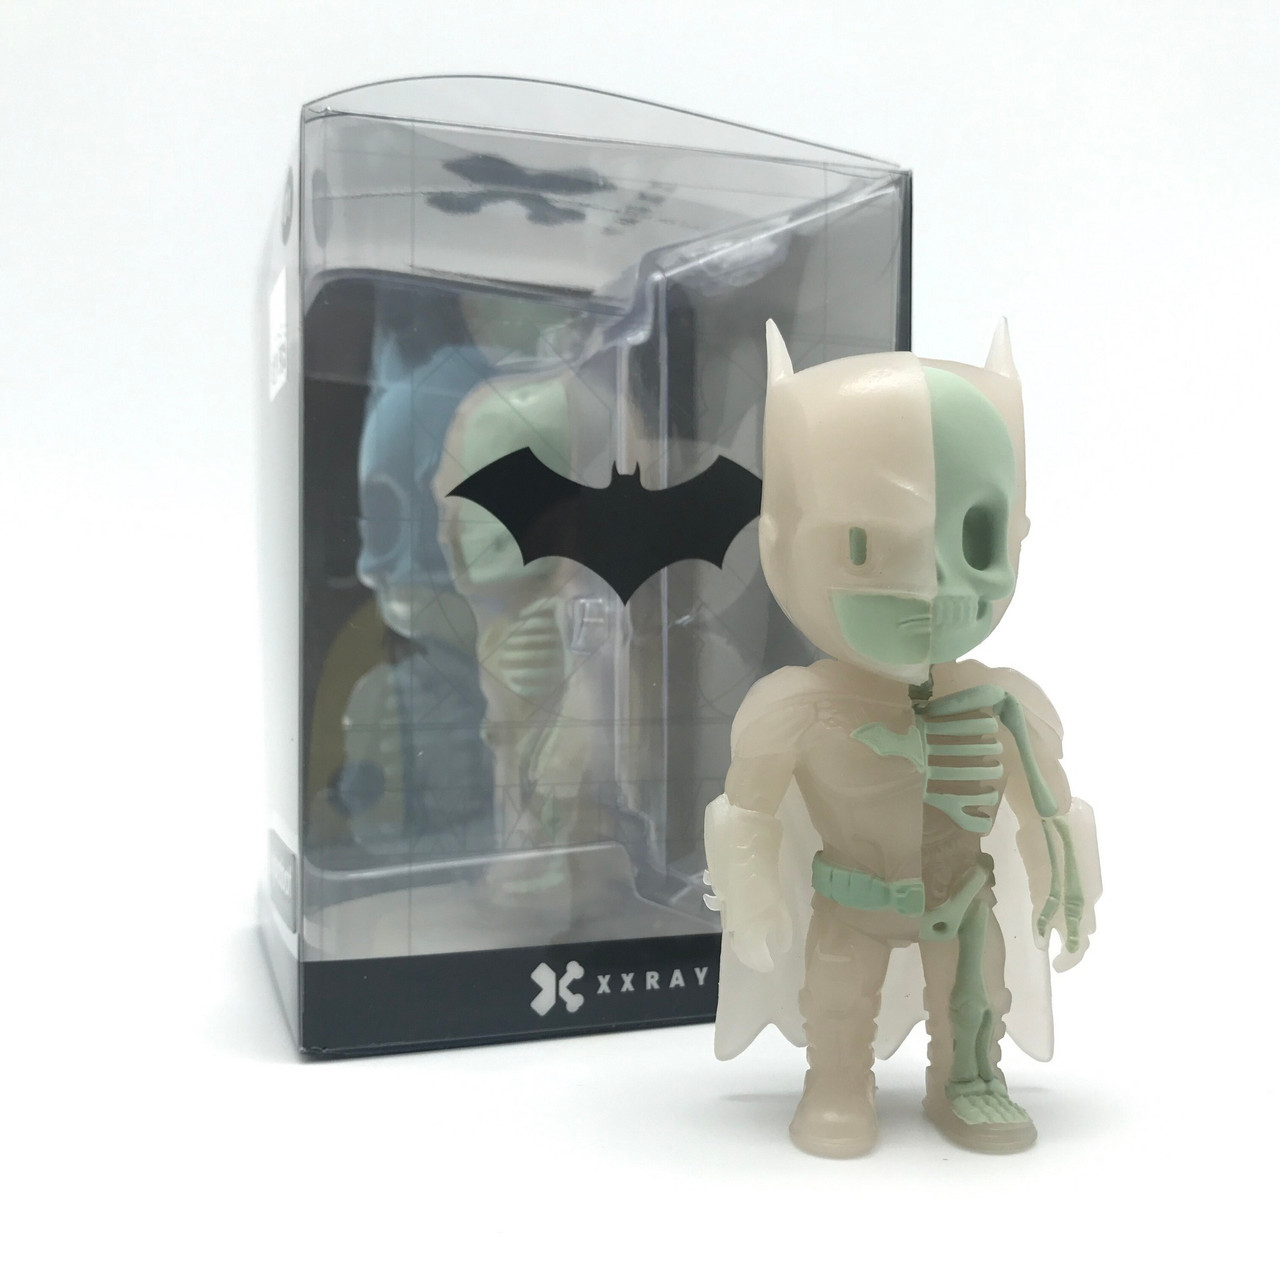 Mighty Jaxx XXRAY - Batman Kidrobot Exclusive GID Figure by Jason Freeny -  Vagabond Games & Collectables